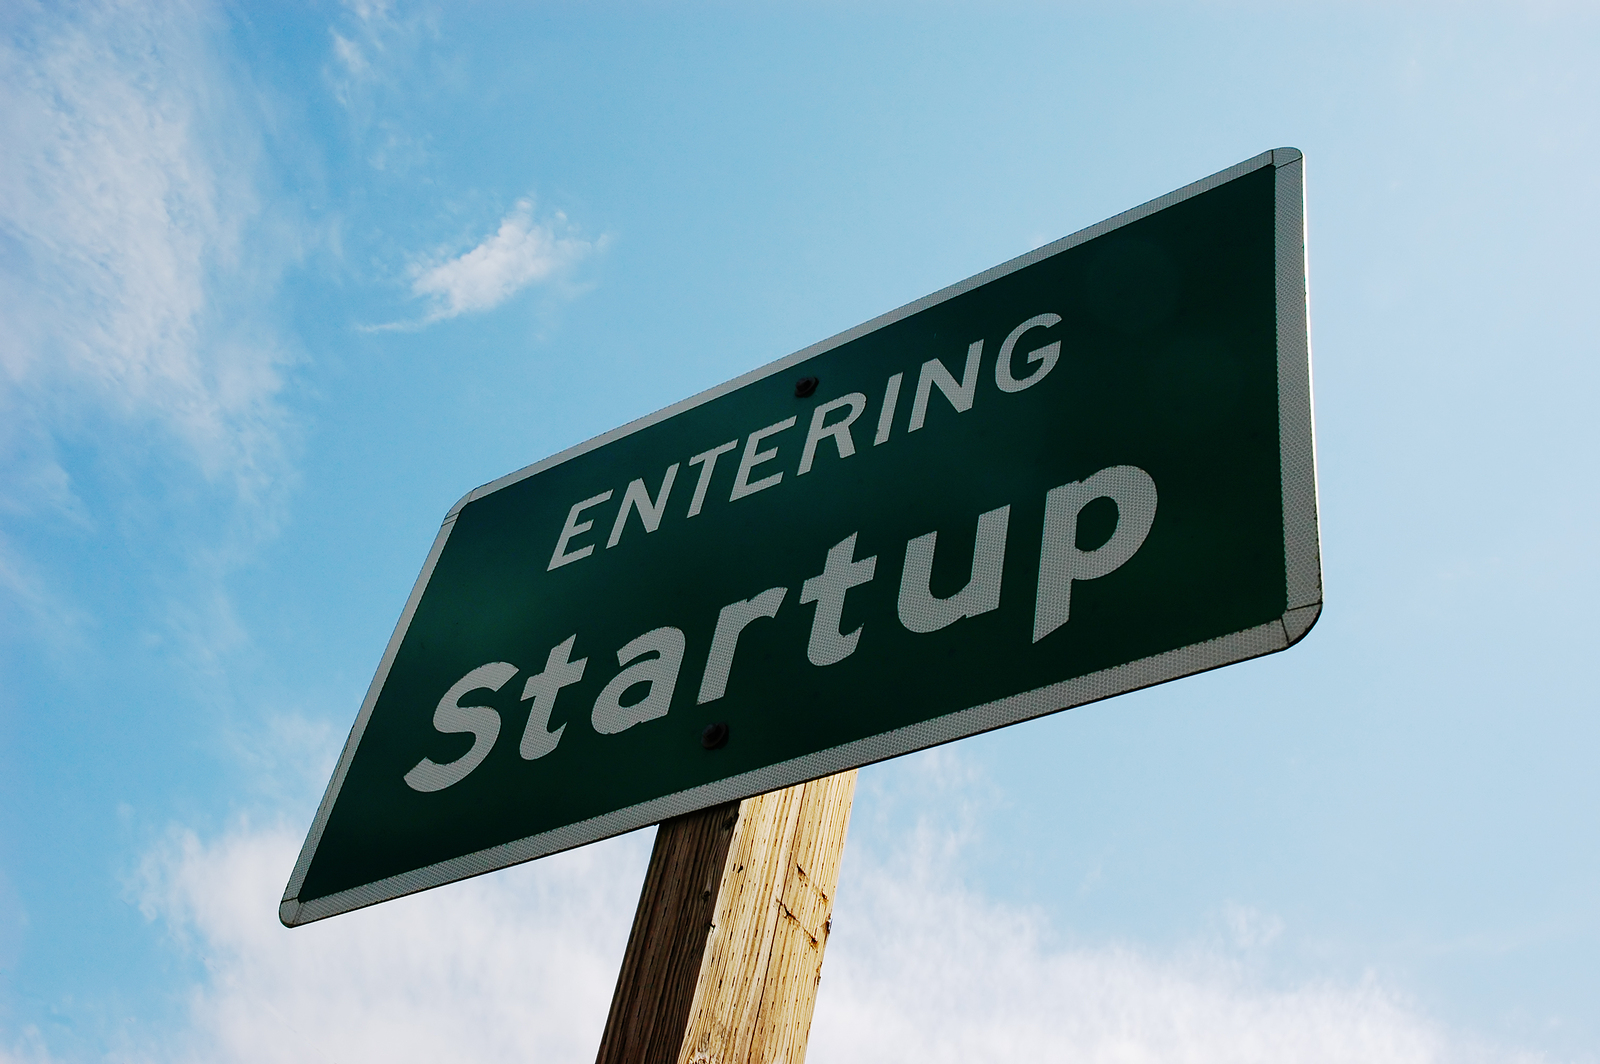 More information about "Έρχεται νομοσχέδιο για την ανάπτυξη των startups"